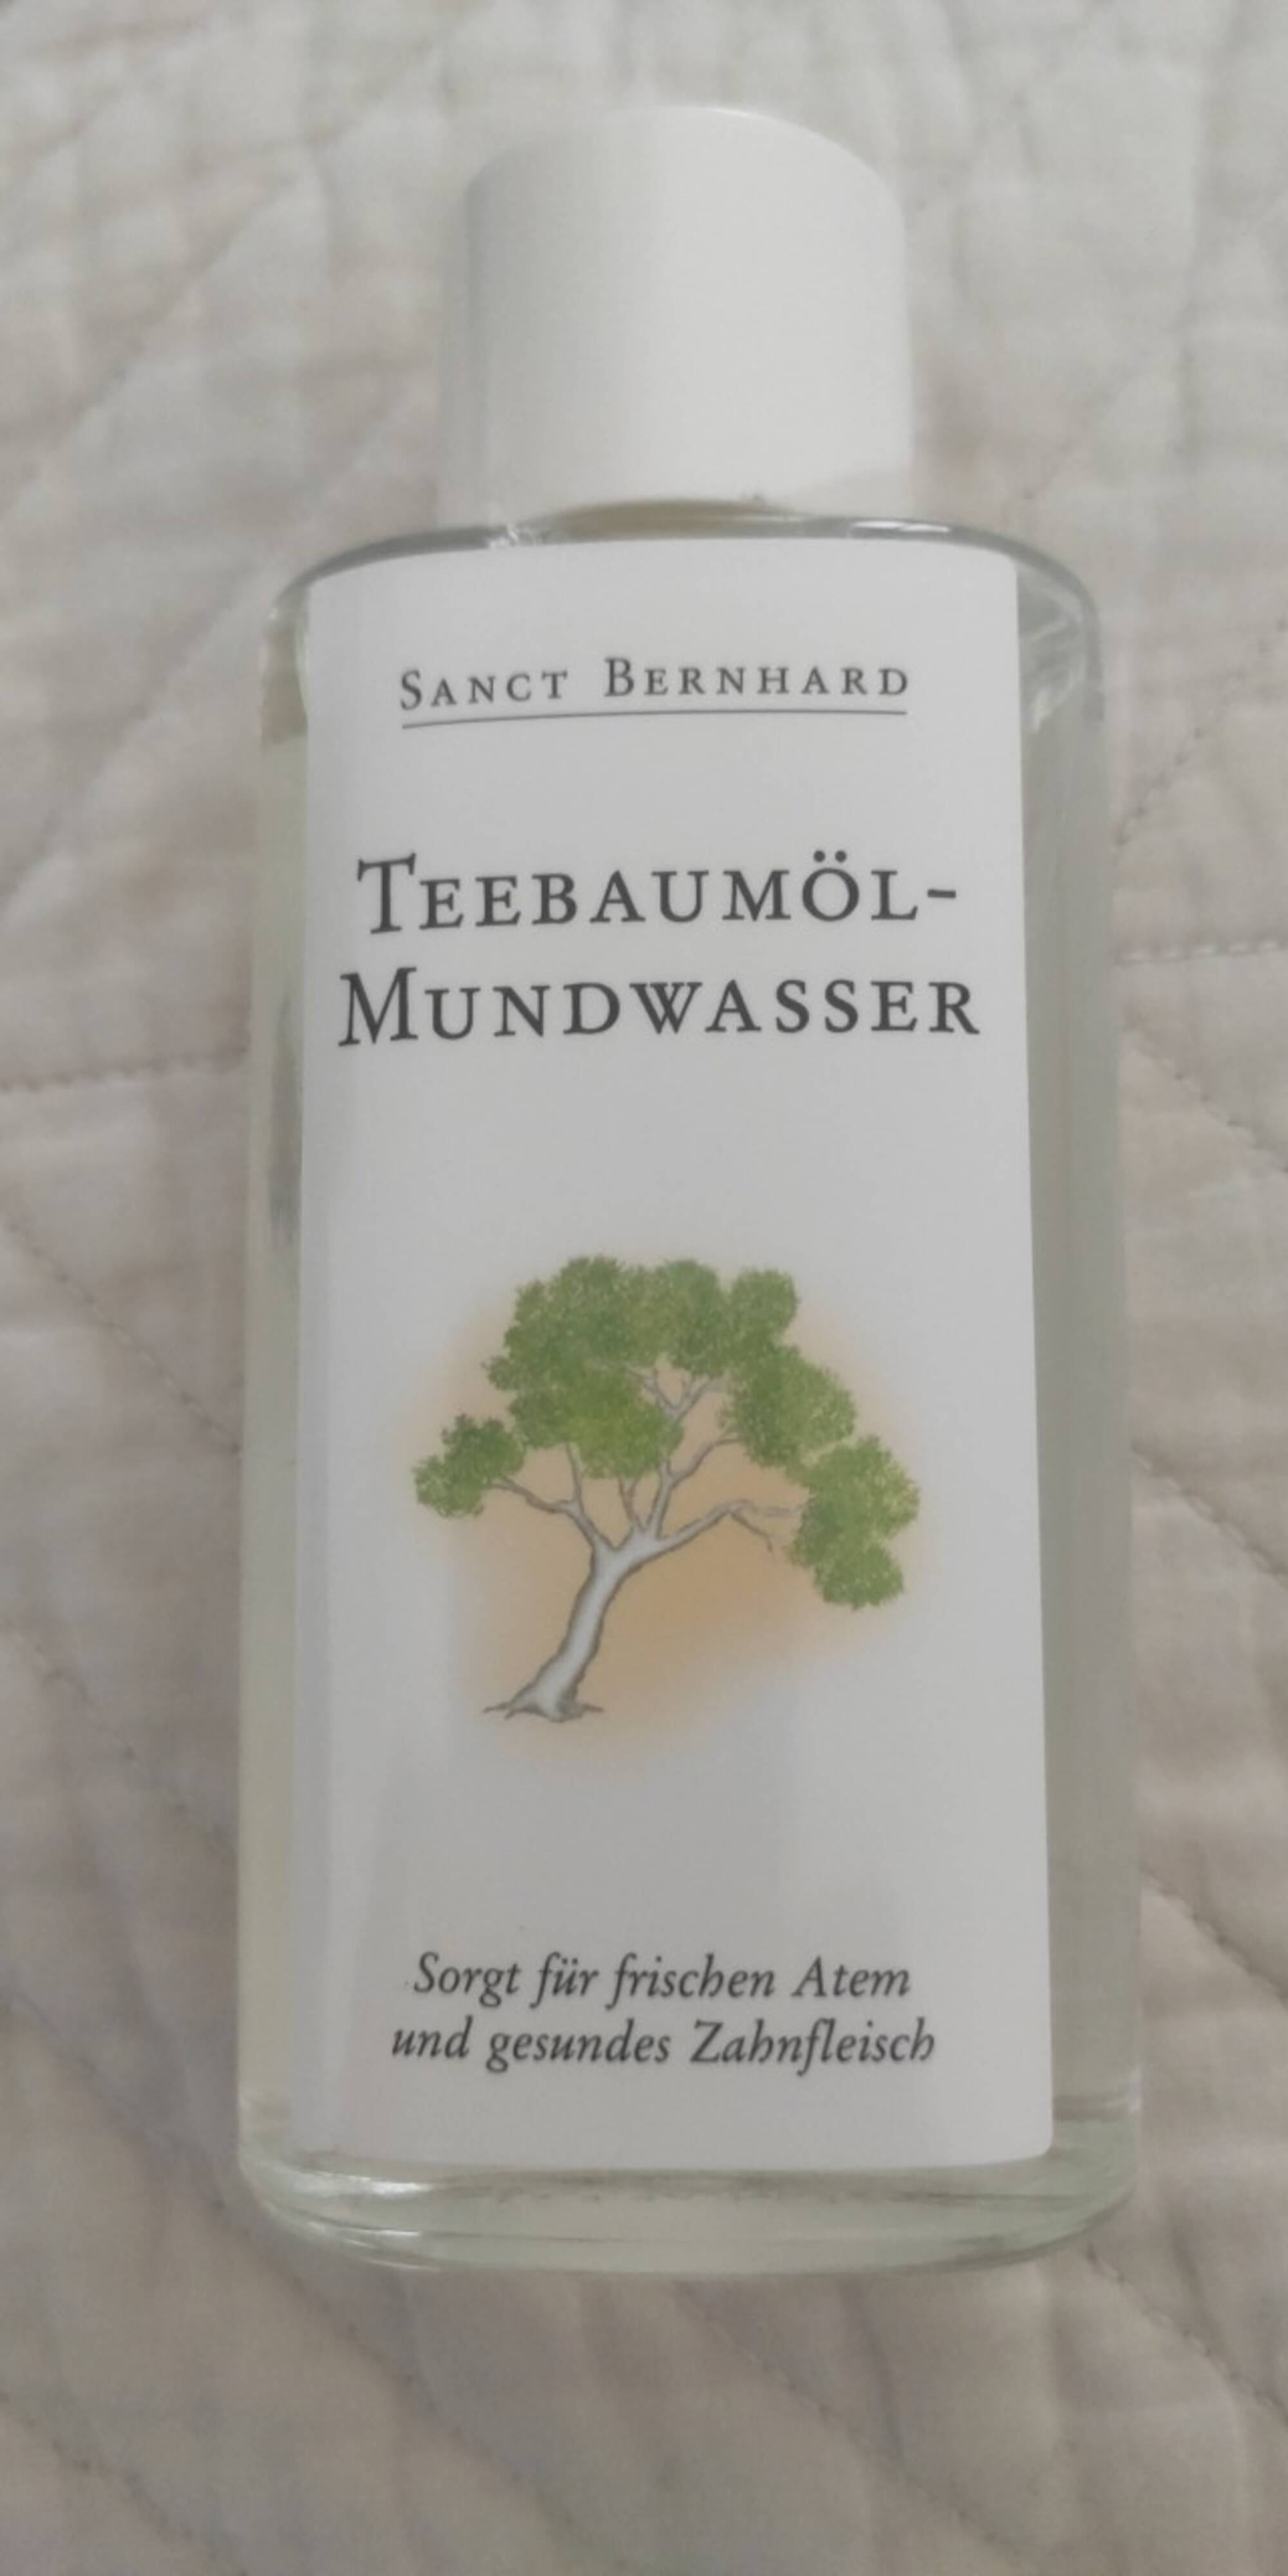 SANCT BERNHARD - Teebaumöl - Mundwasser